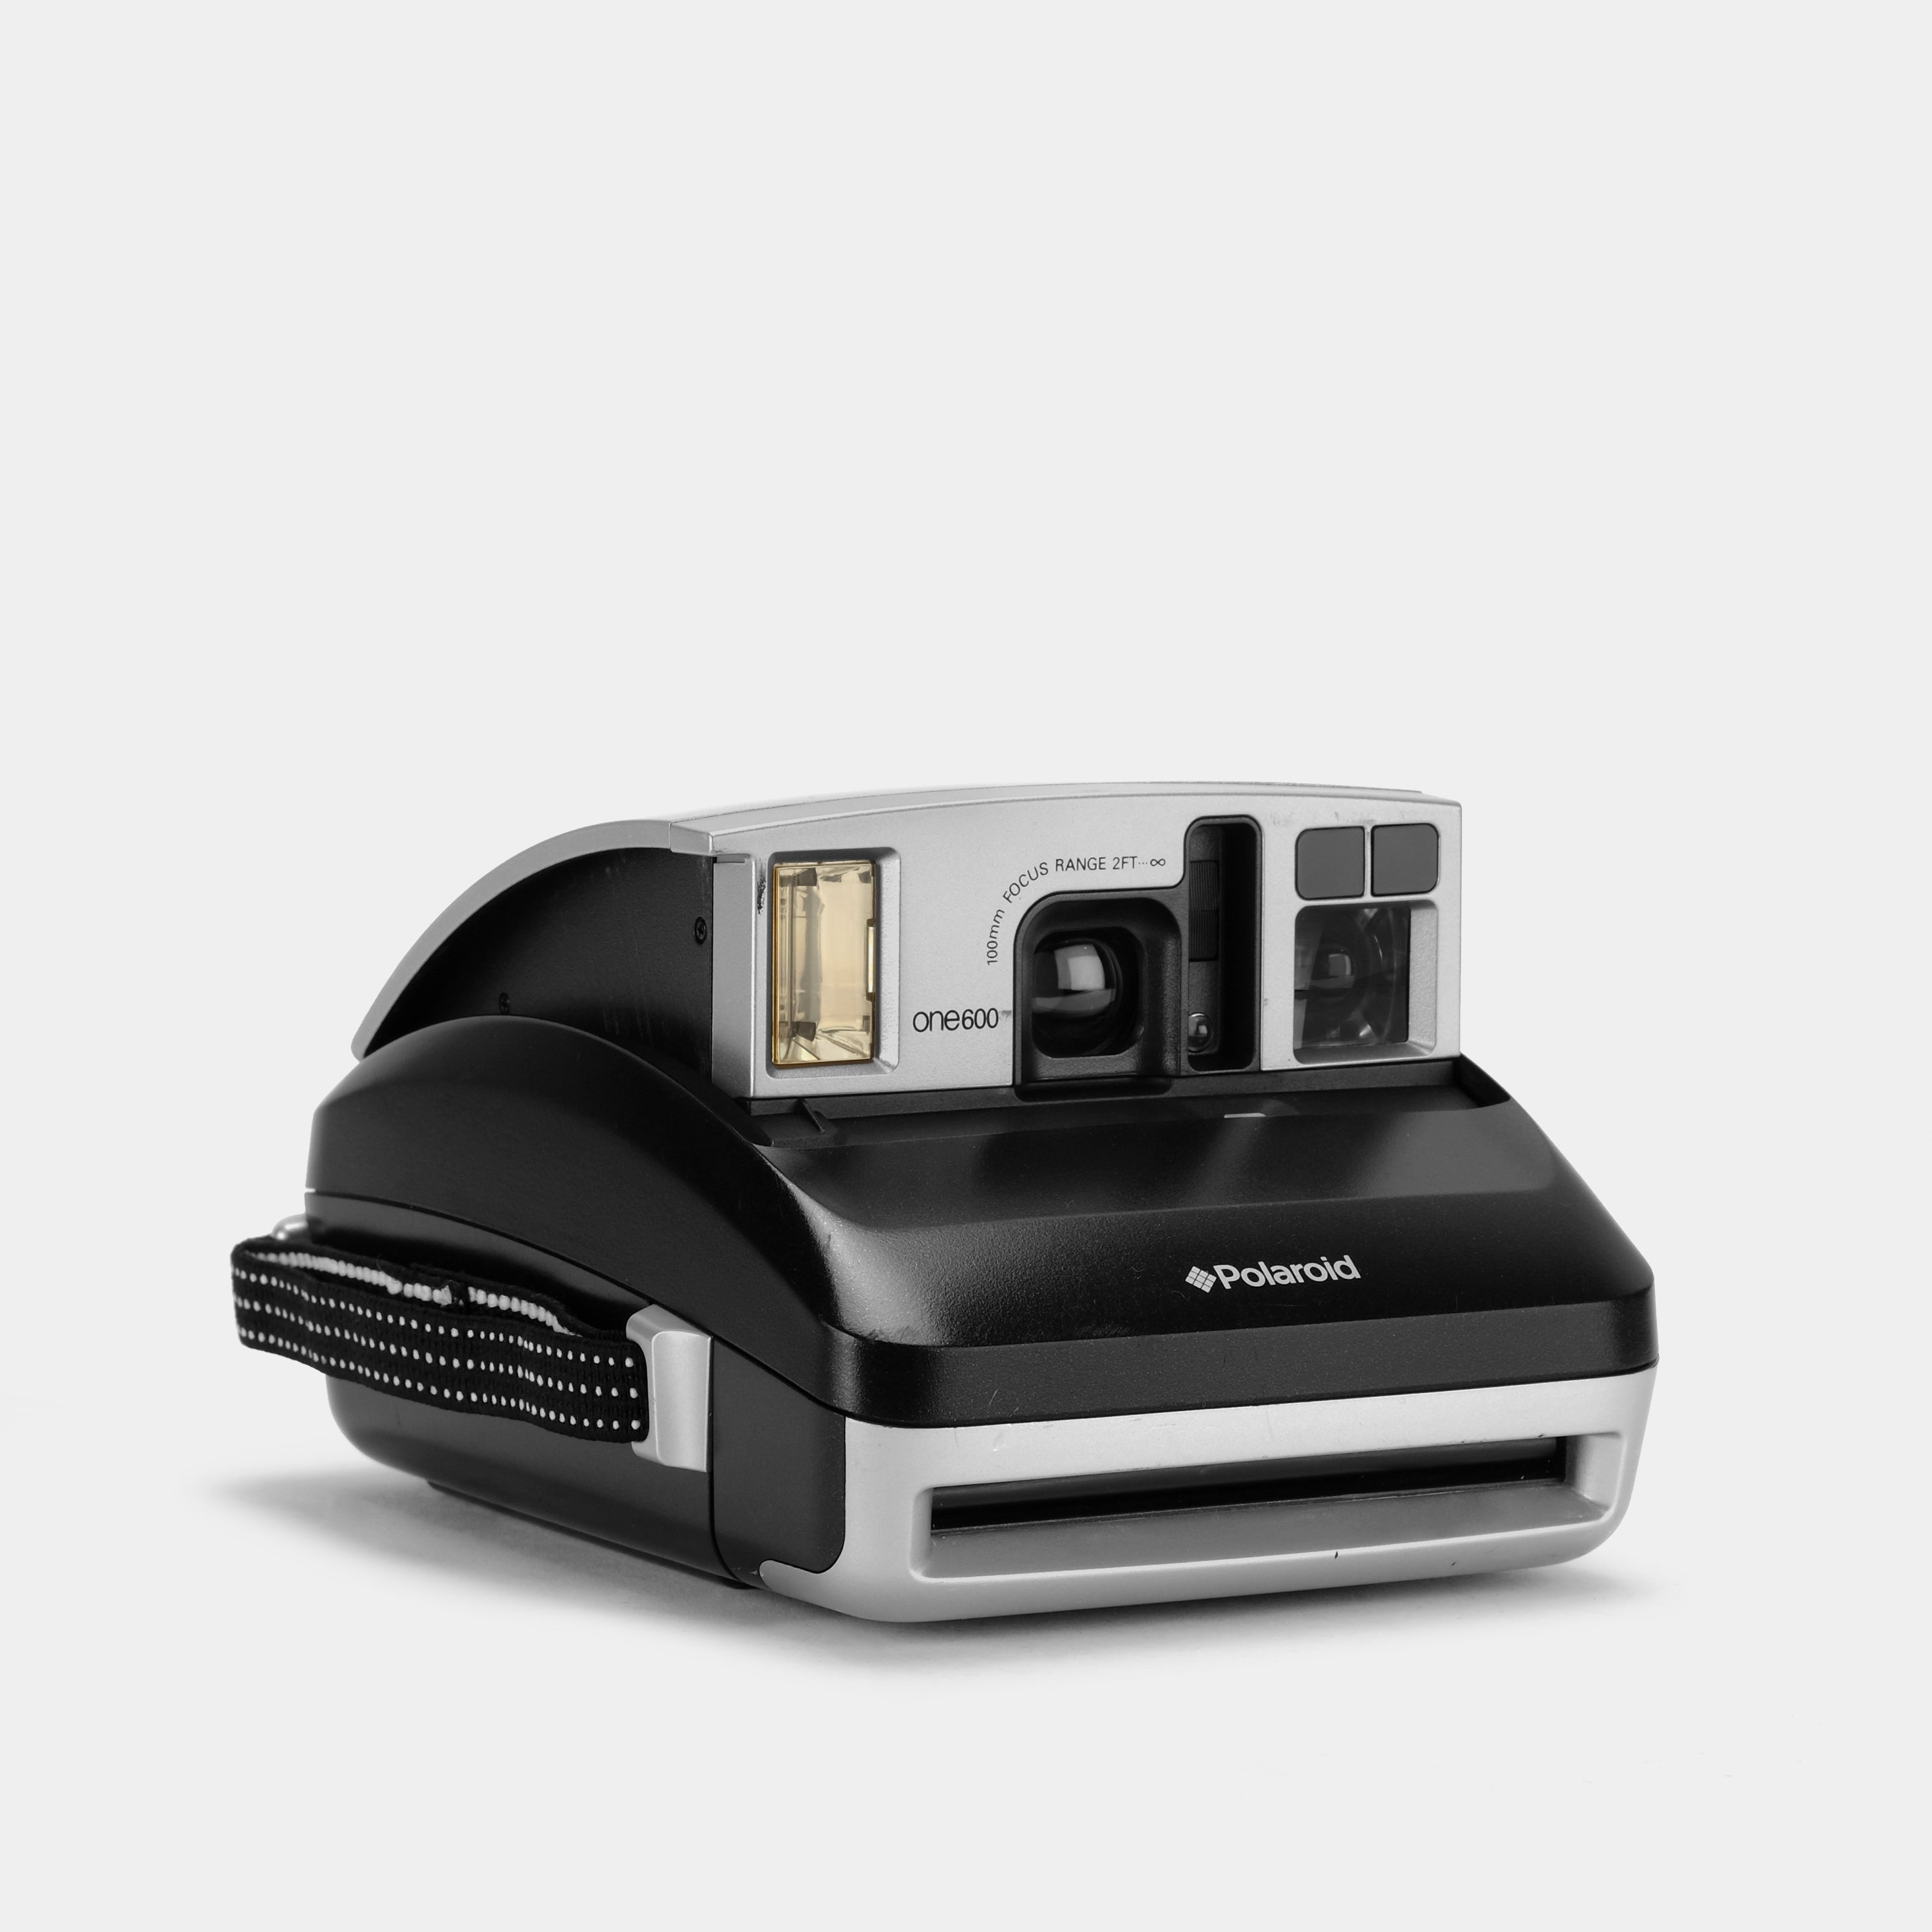 Retrospekt® Polaroid 600 Business Edition Instant Film Camera